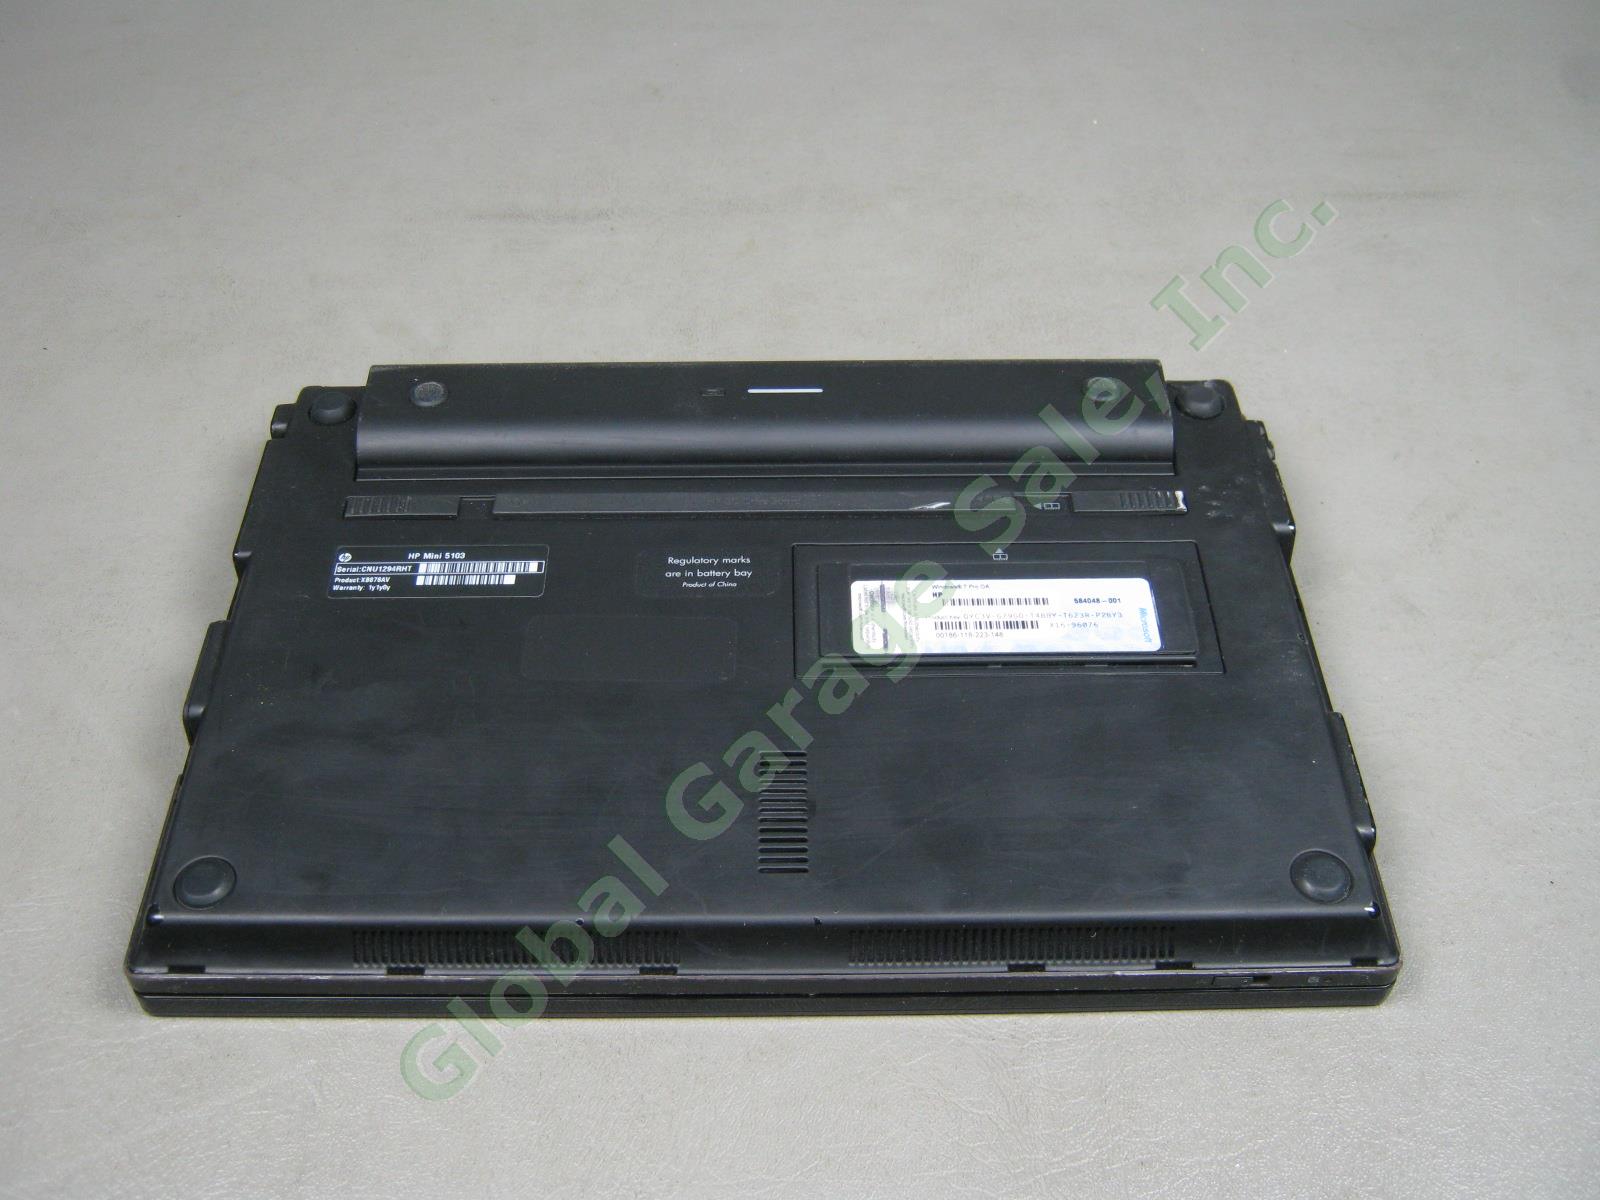 HP Mini 5103 10.1" Netbook Laptop Intel Atom 1.83GHz 2GB RAM 160GB HDD Windows 7 7